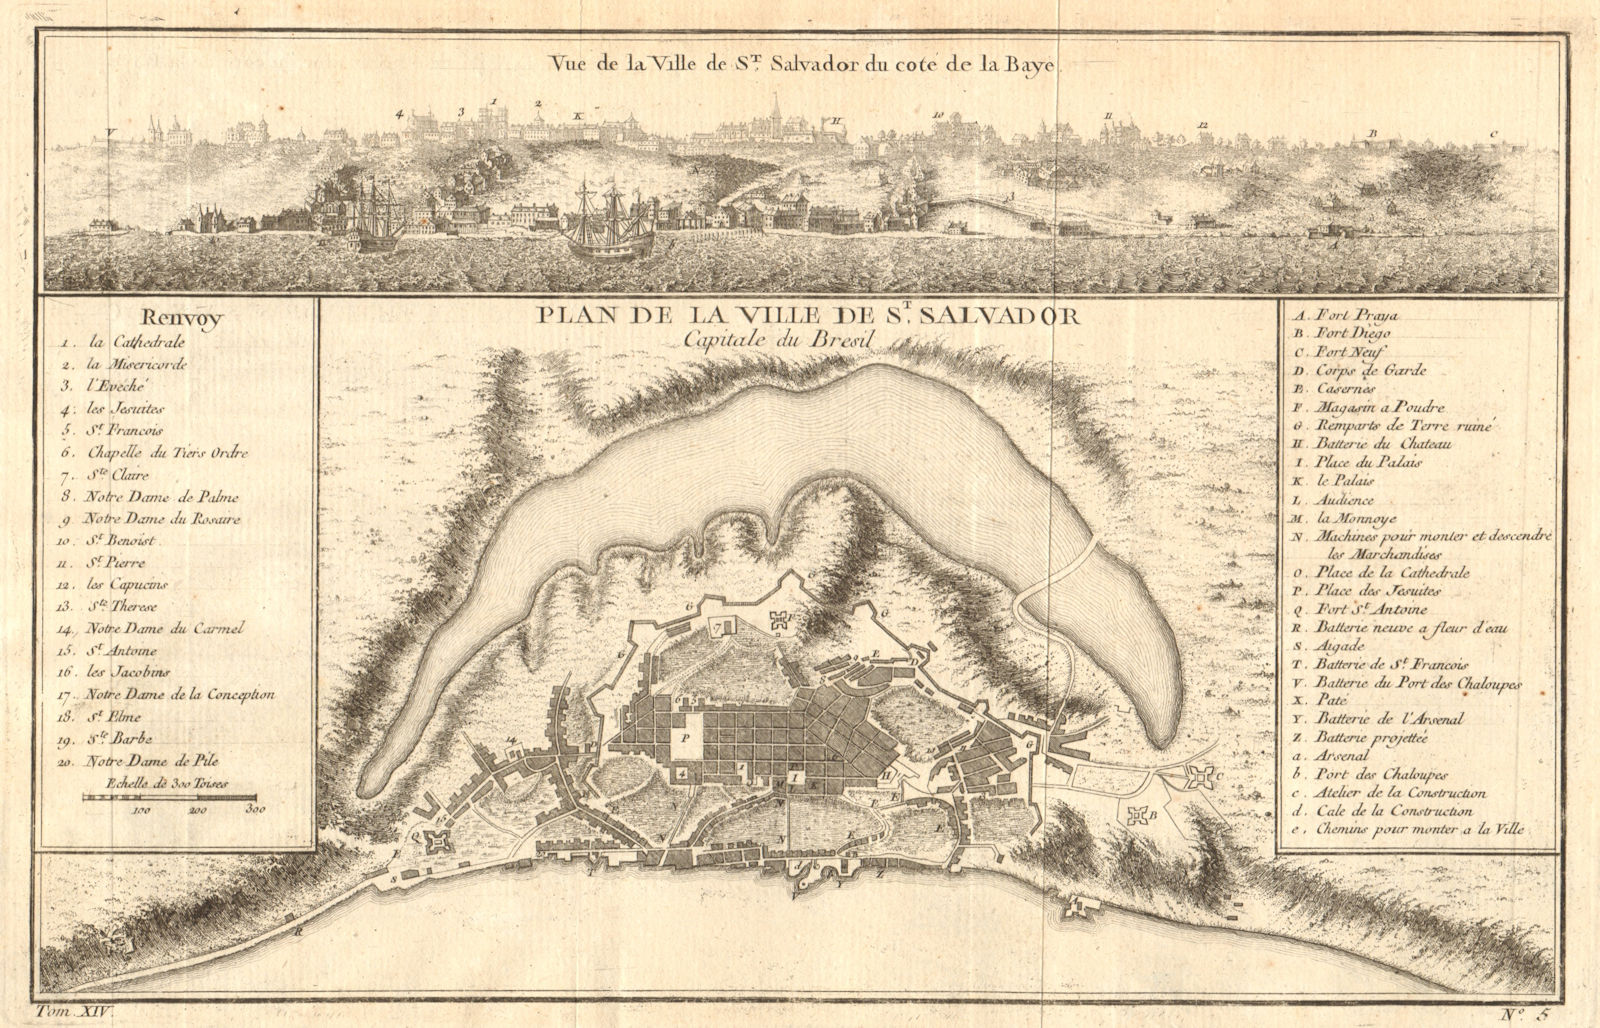 'Plan de la Ville de St Salvador…' Salvador de Bahia, Brazil. BELLIN 1757 map